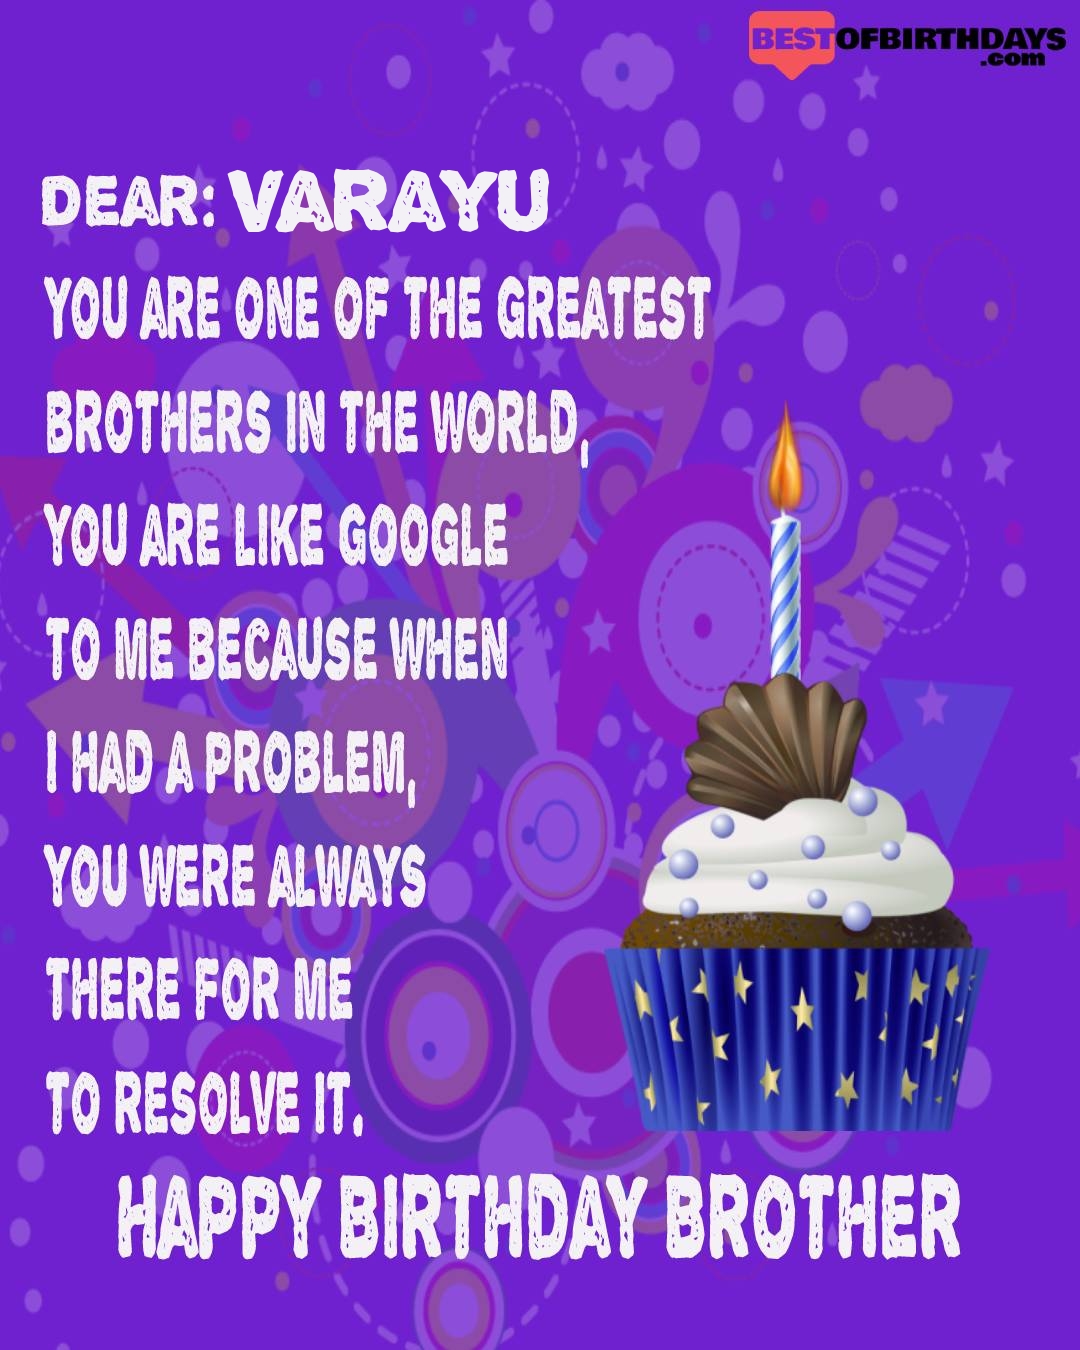 Happy birthday varayu bhai brother bro